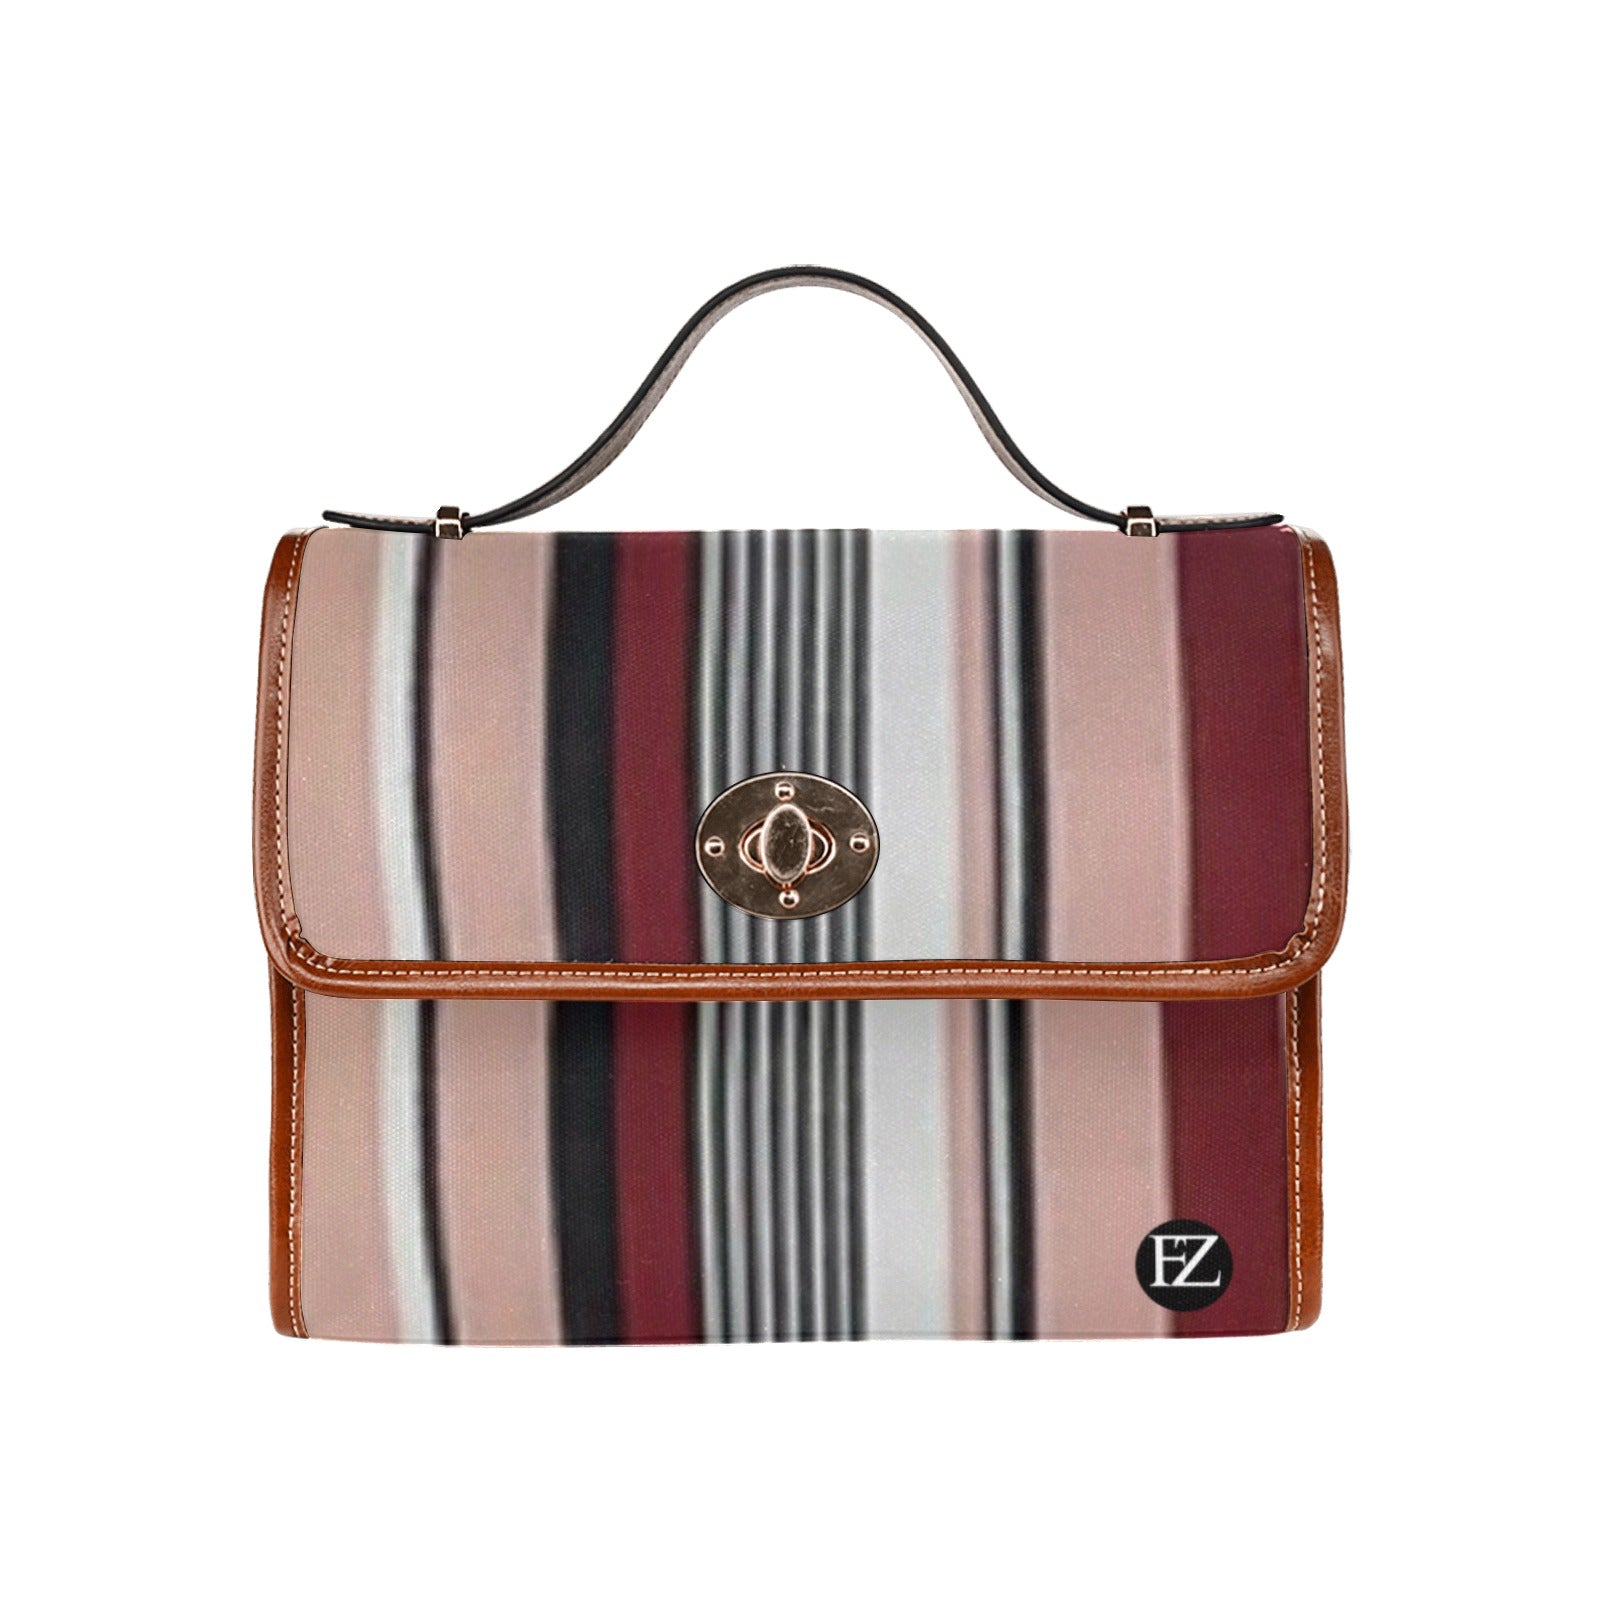 fz stripe handbag all over print waterproof canvas bag(model1641)(brown strap)